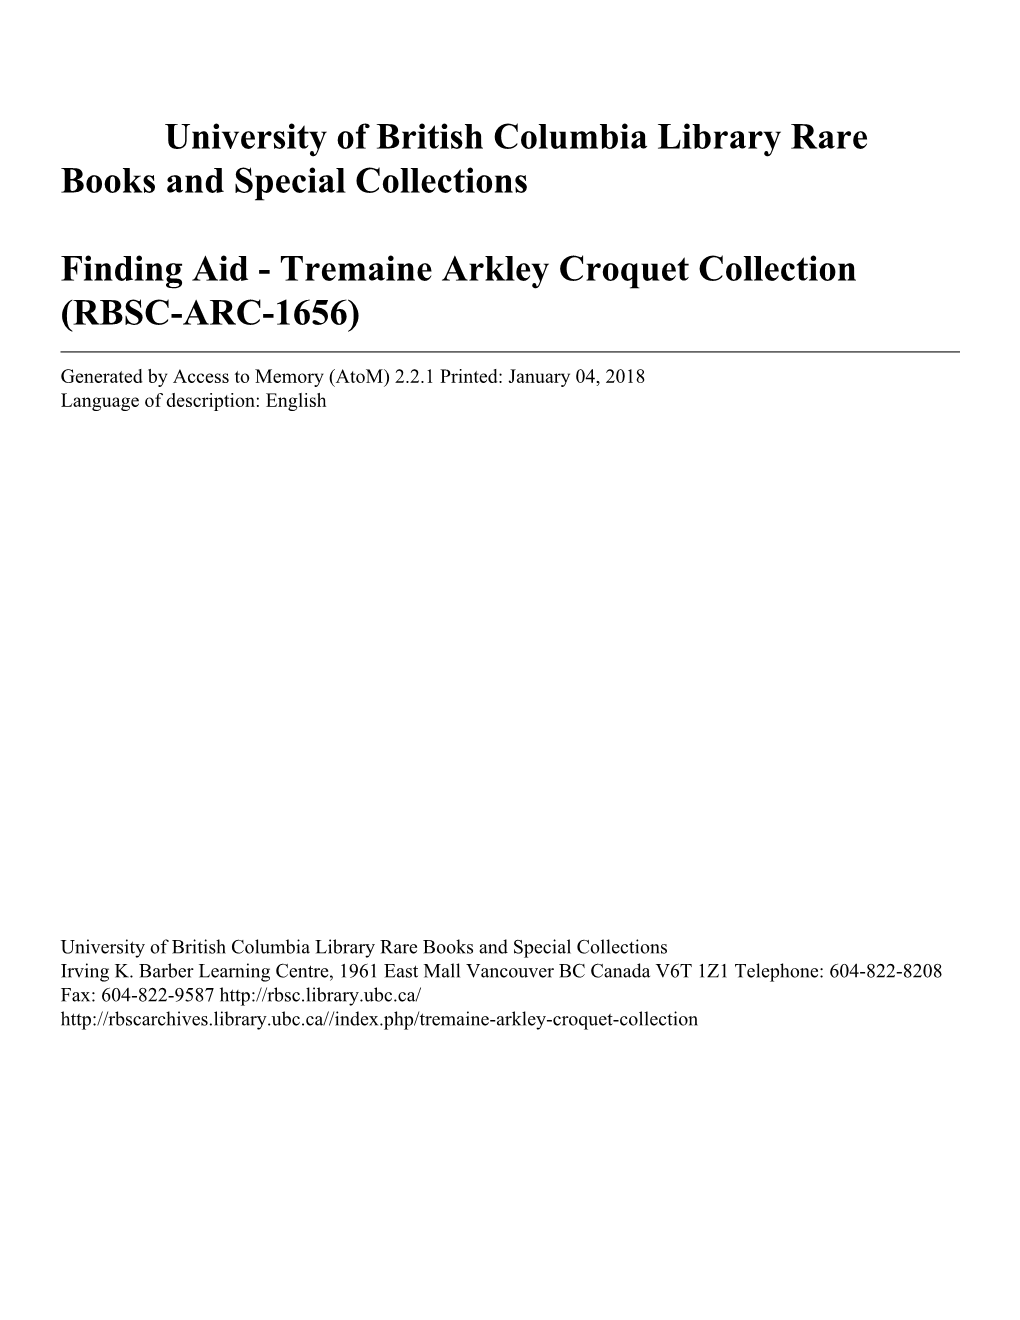 Tremaine Arkley Croquet Collection (RBSC-ARC-1656)